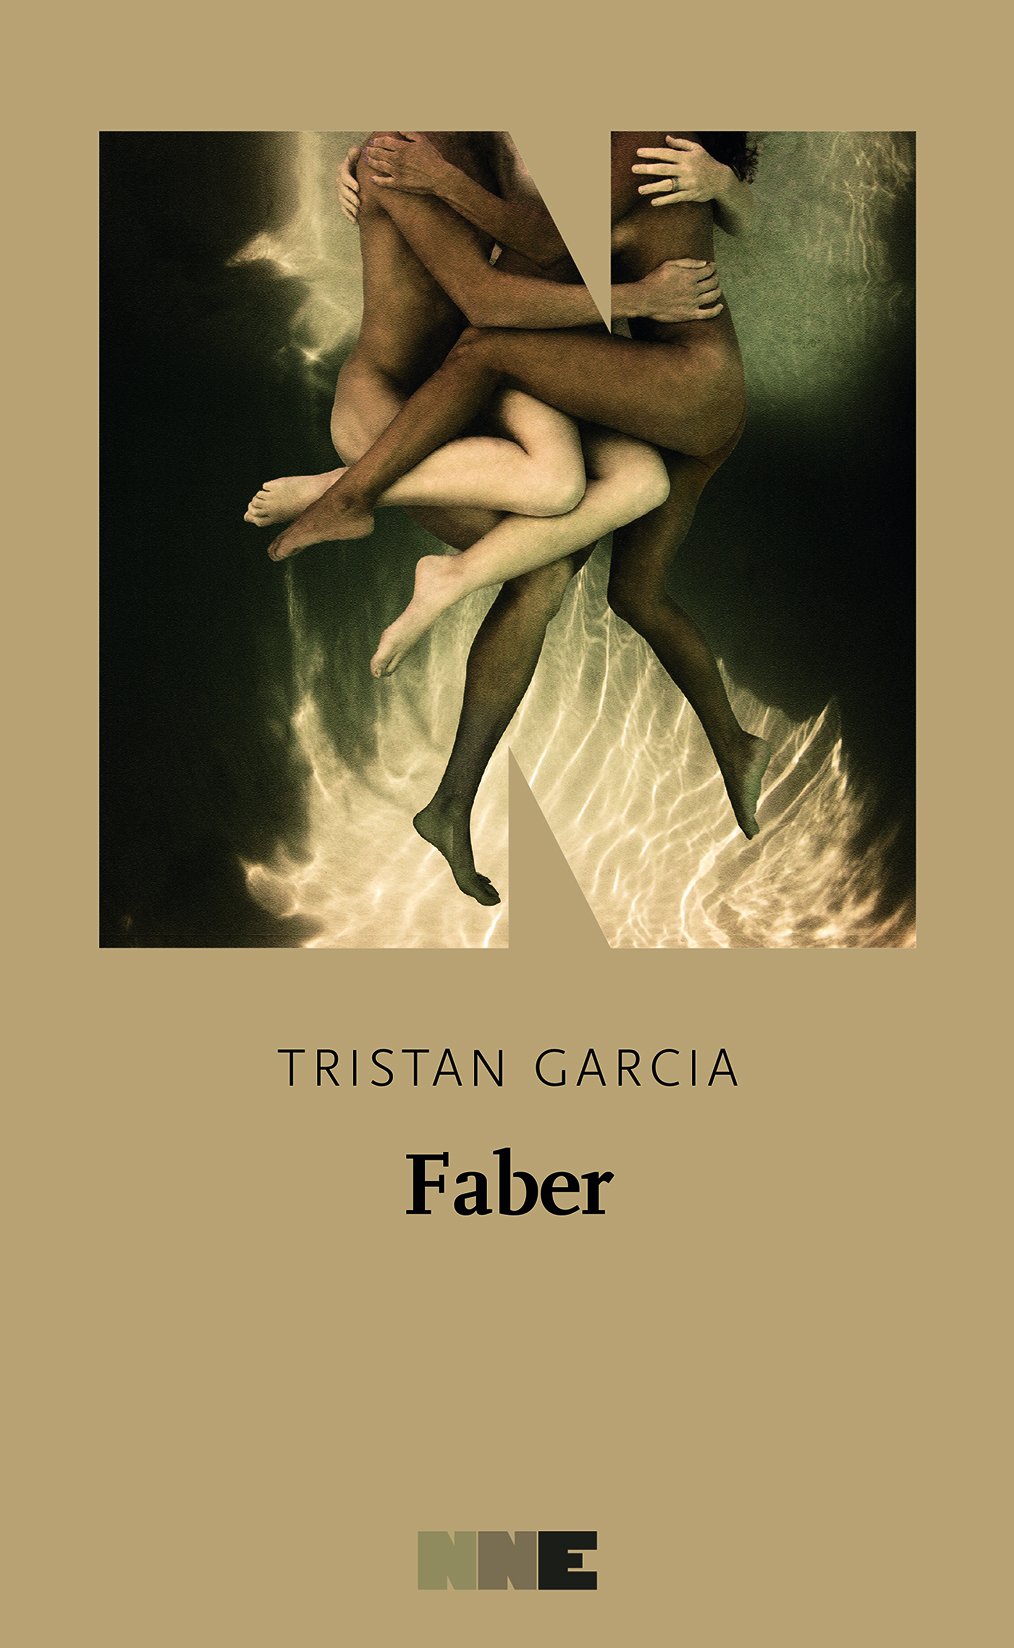 Tristan Garcia – Faber